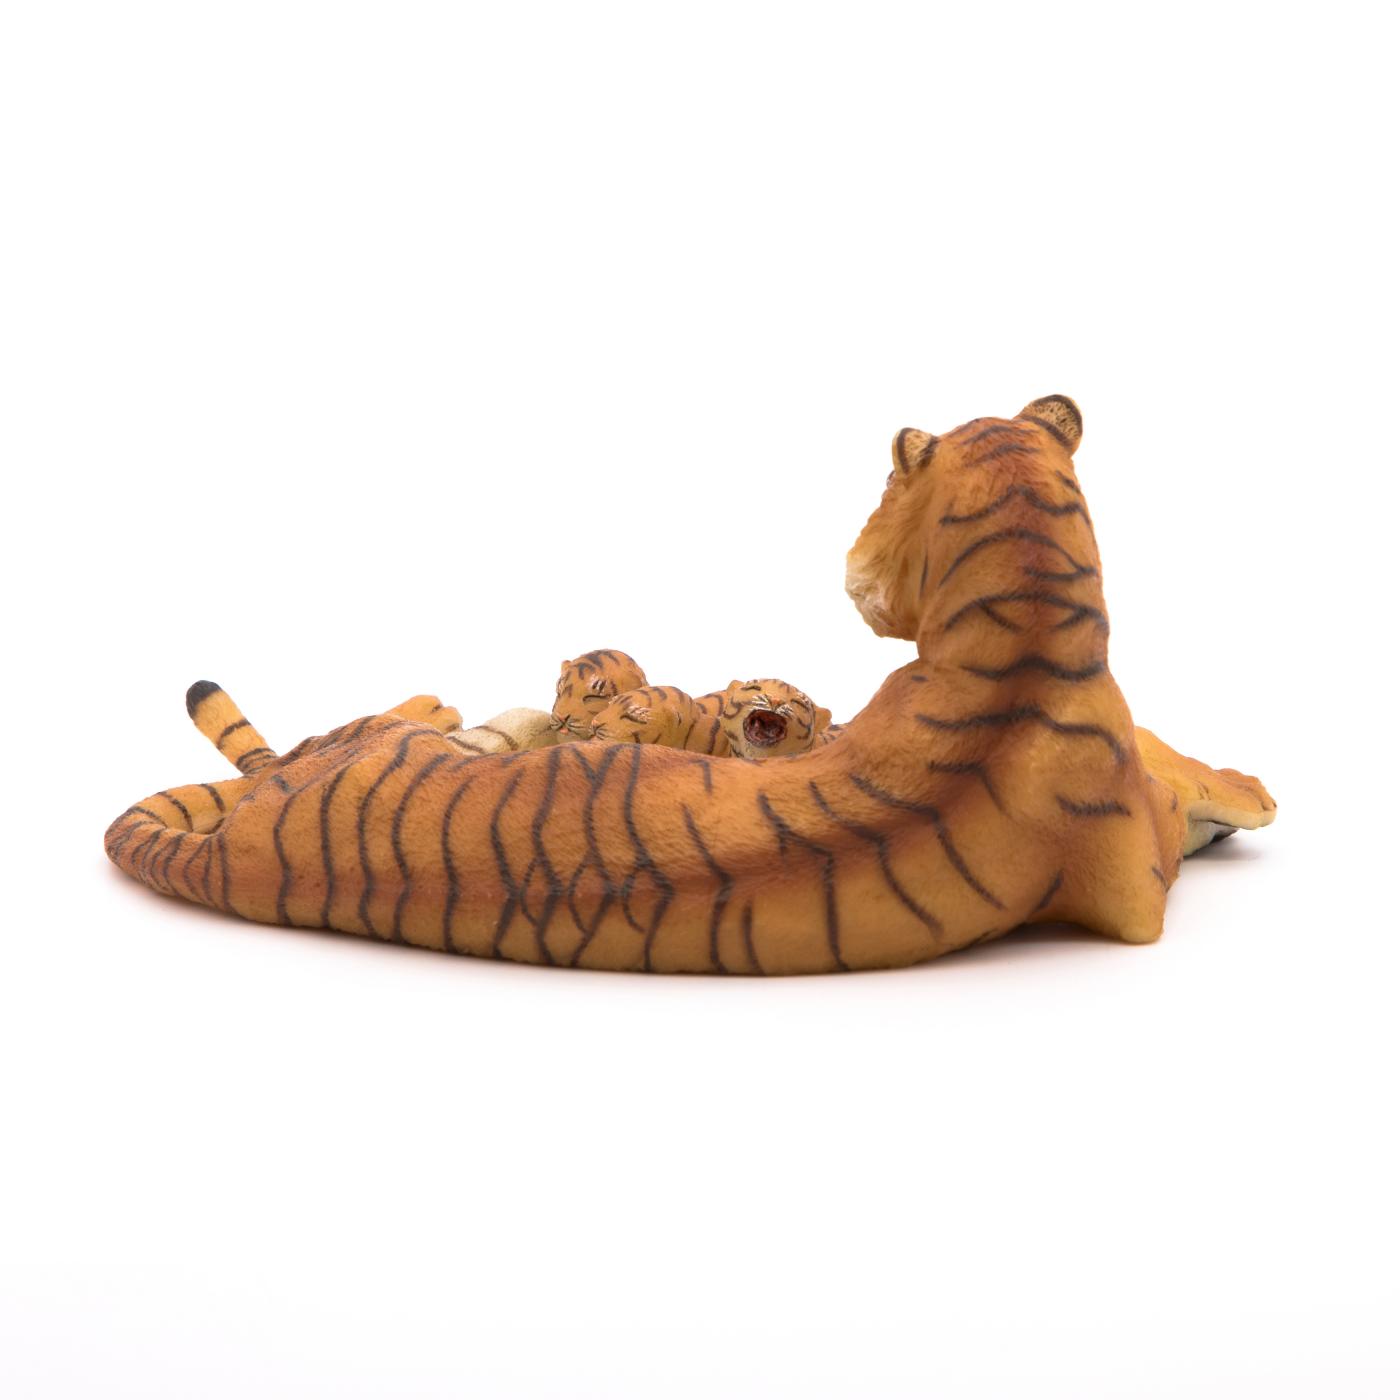 Papo Wild Animal Kingdom Figure Lying Tigress Nursing 50156 for sale online 